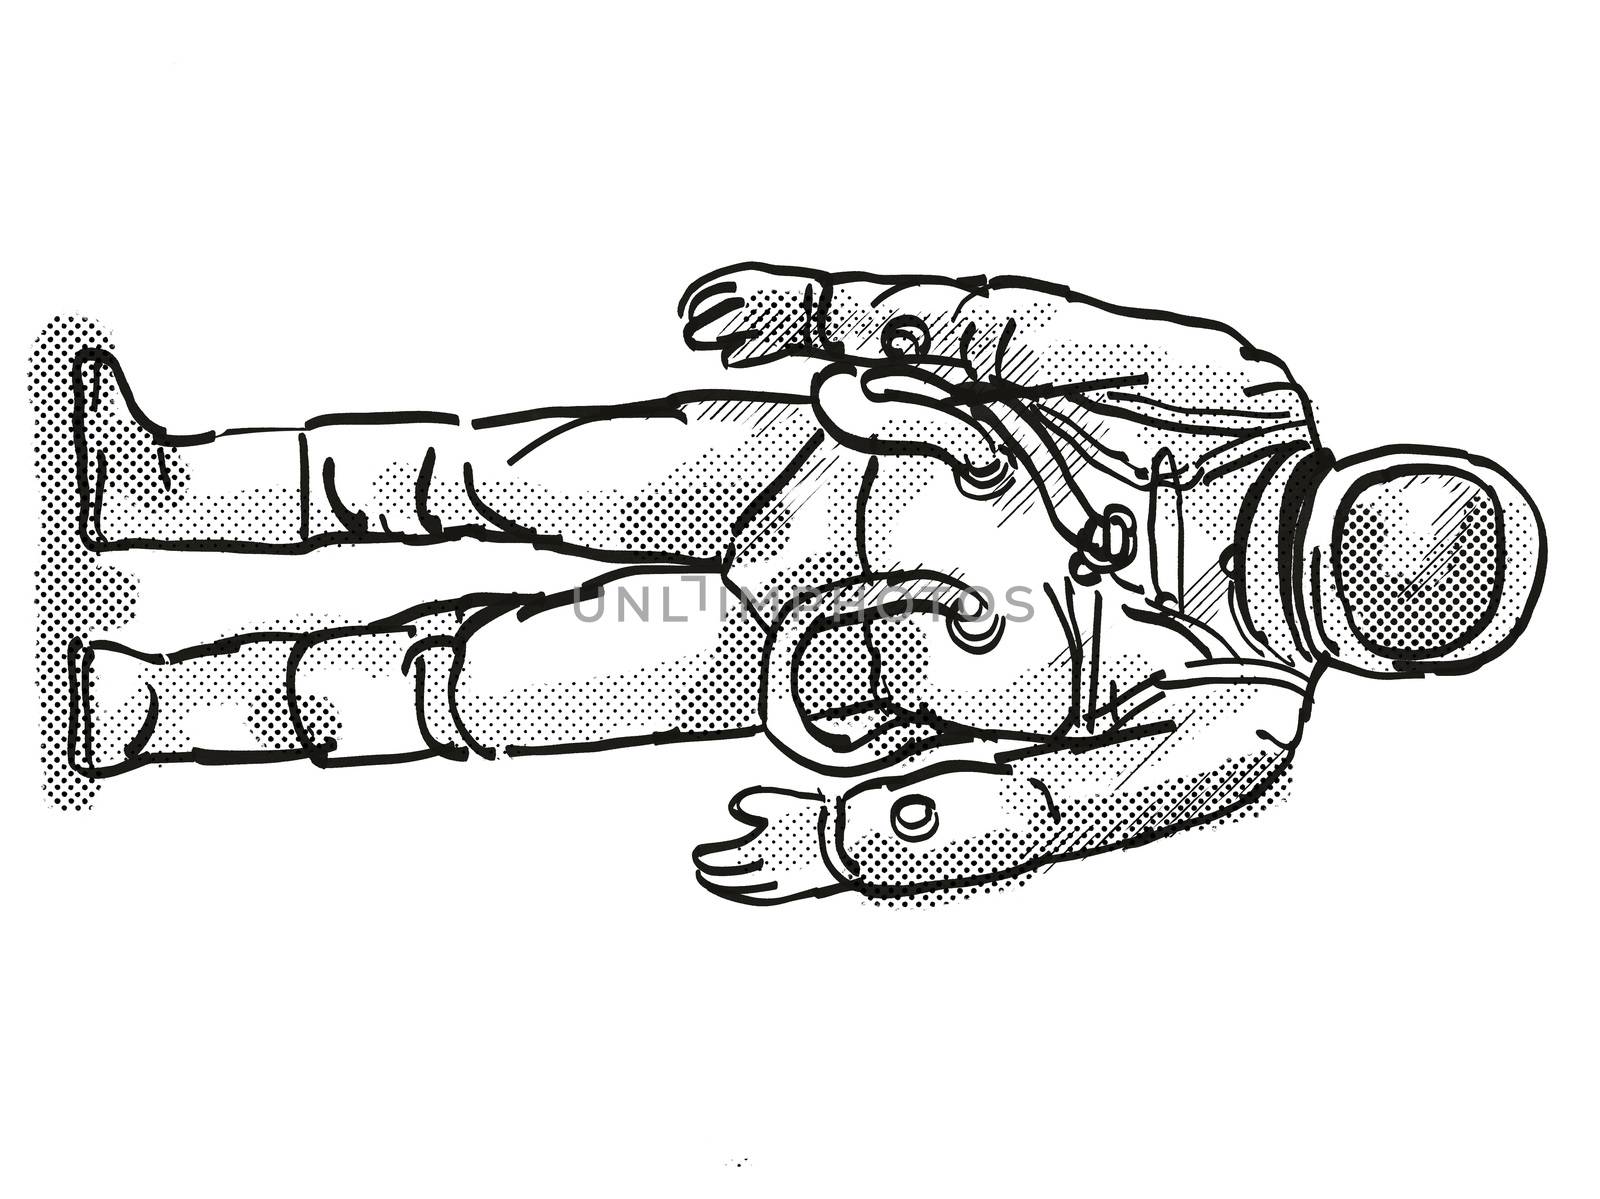 Vintage Astronaut or Spaceman Cartoon Retro Drawing by patrimonio